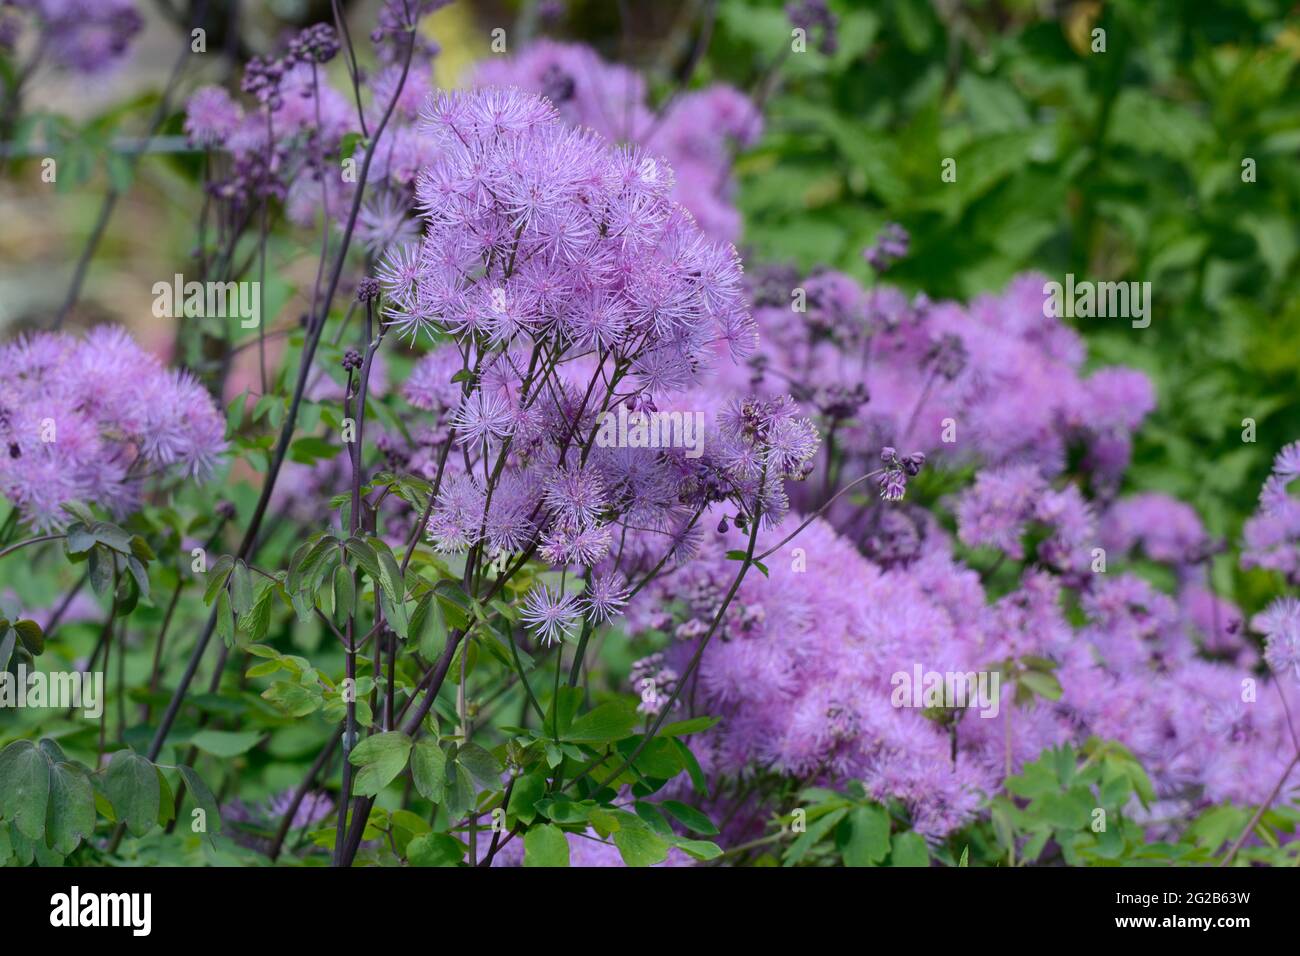 Thalictrum aquilegiifolium purpureum  meadow Rue clusters of purple flowers on strong stems Stock Photo